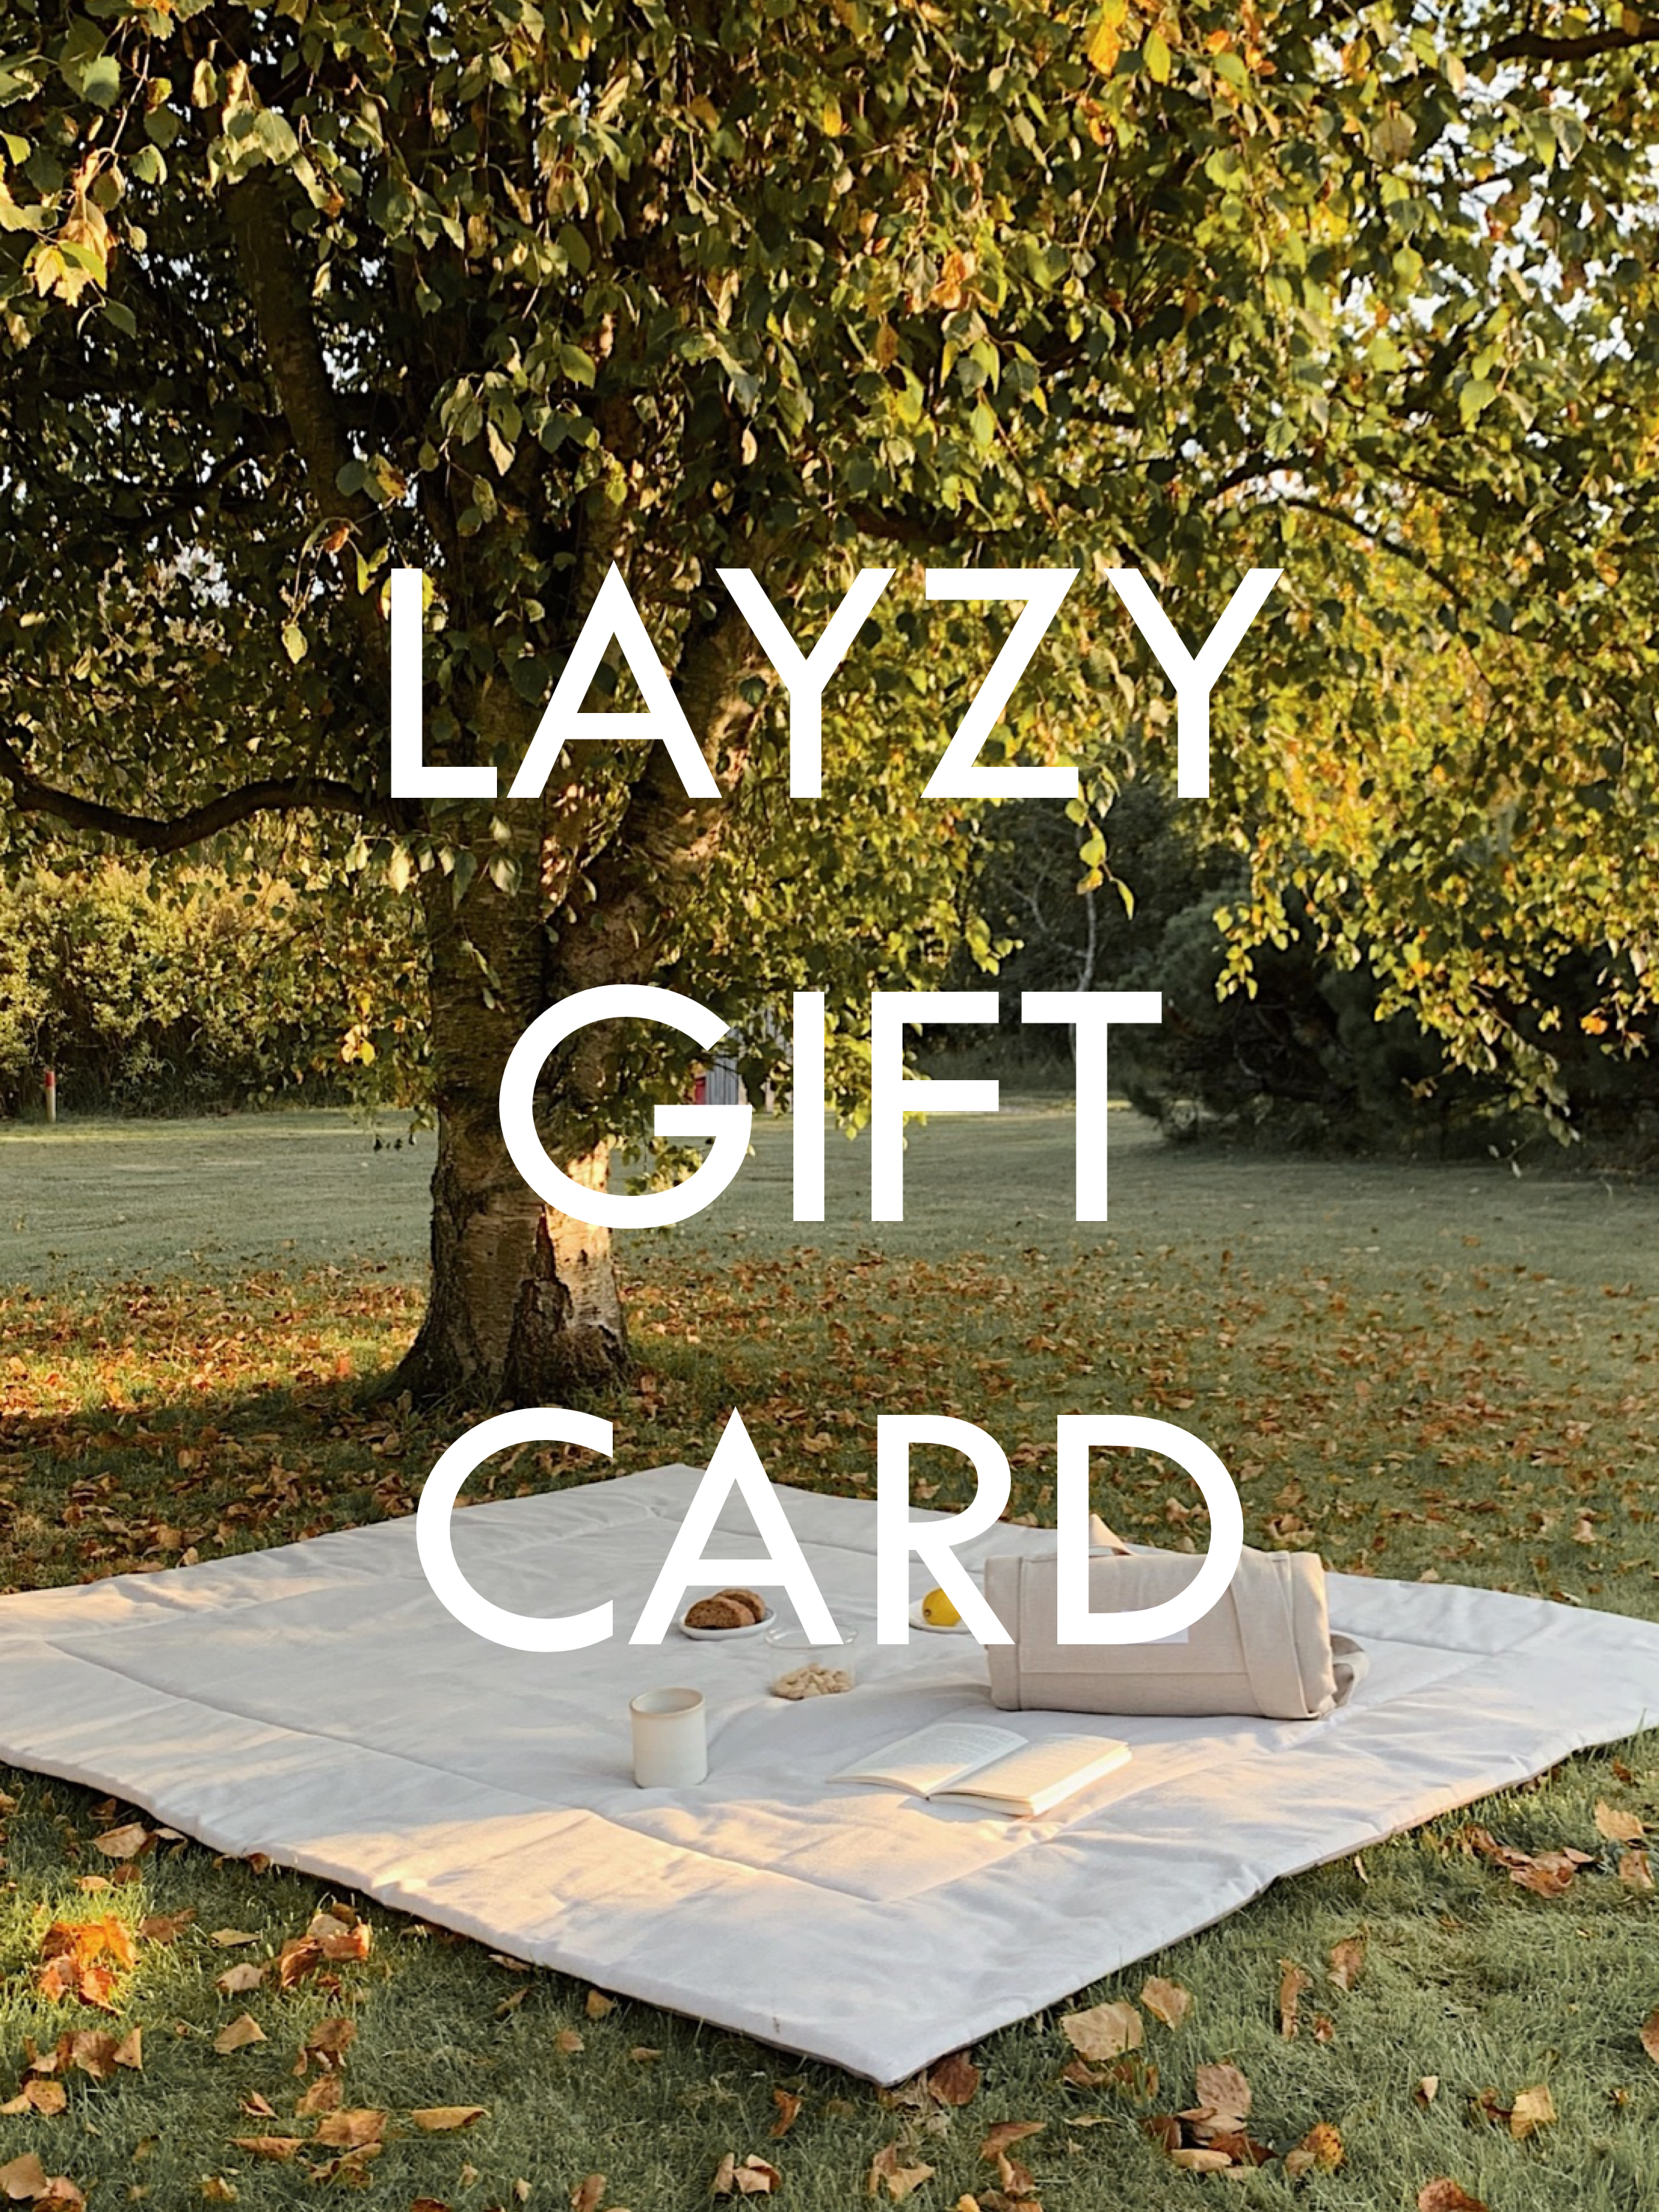 Layzy Gift Card